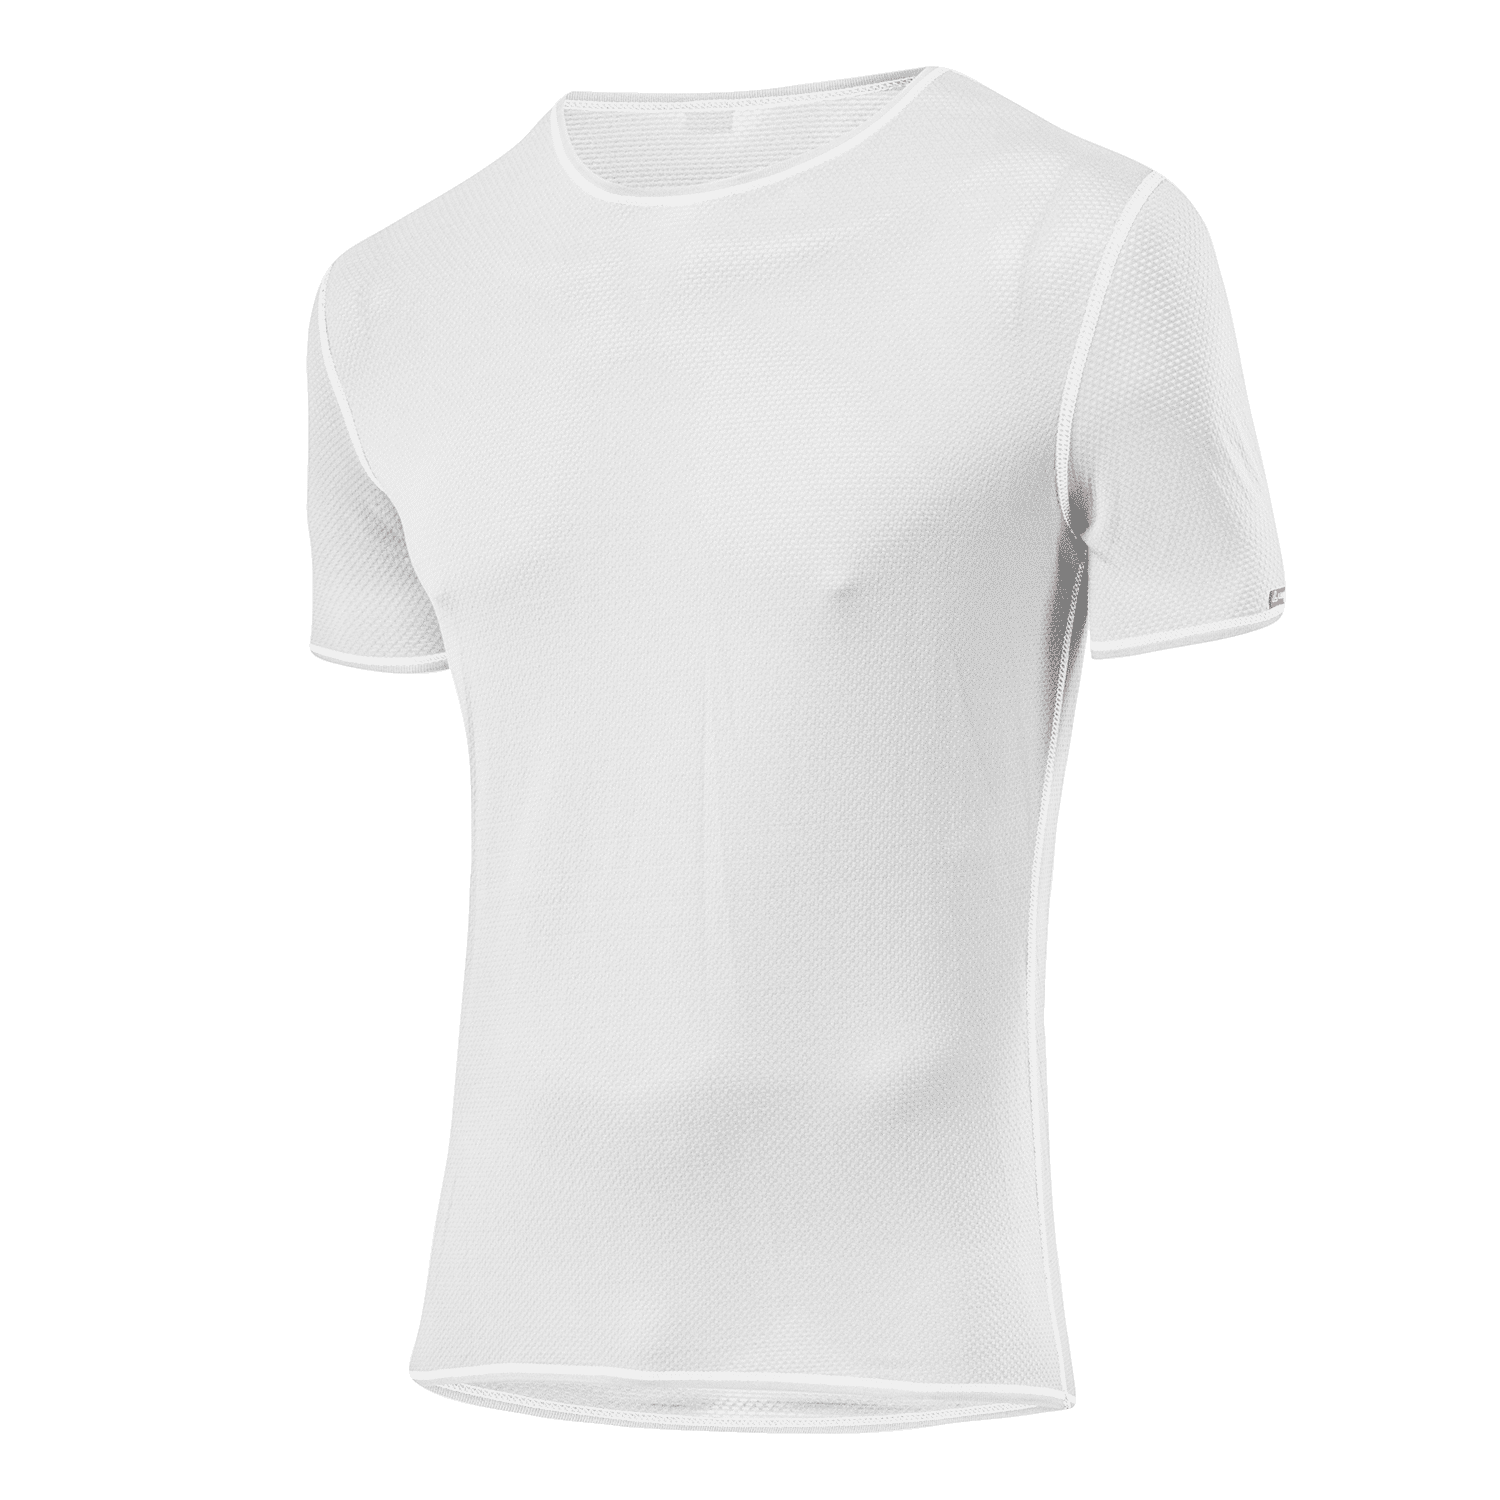 Löffler Shirt S/S Transtex Light - Funktionsunterwäsche - Herren